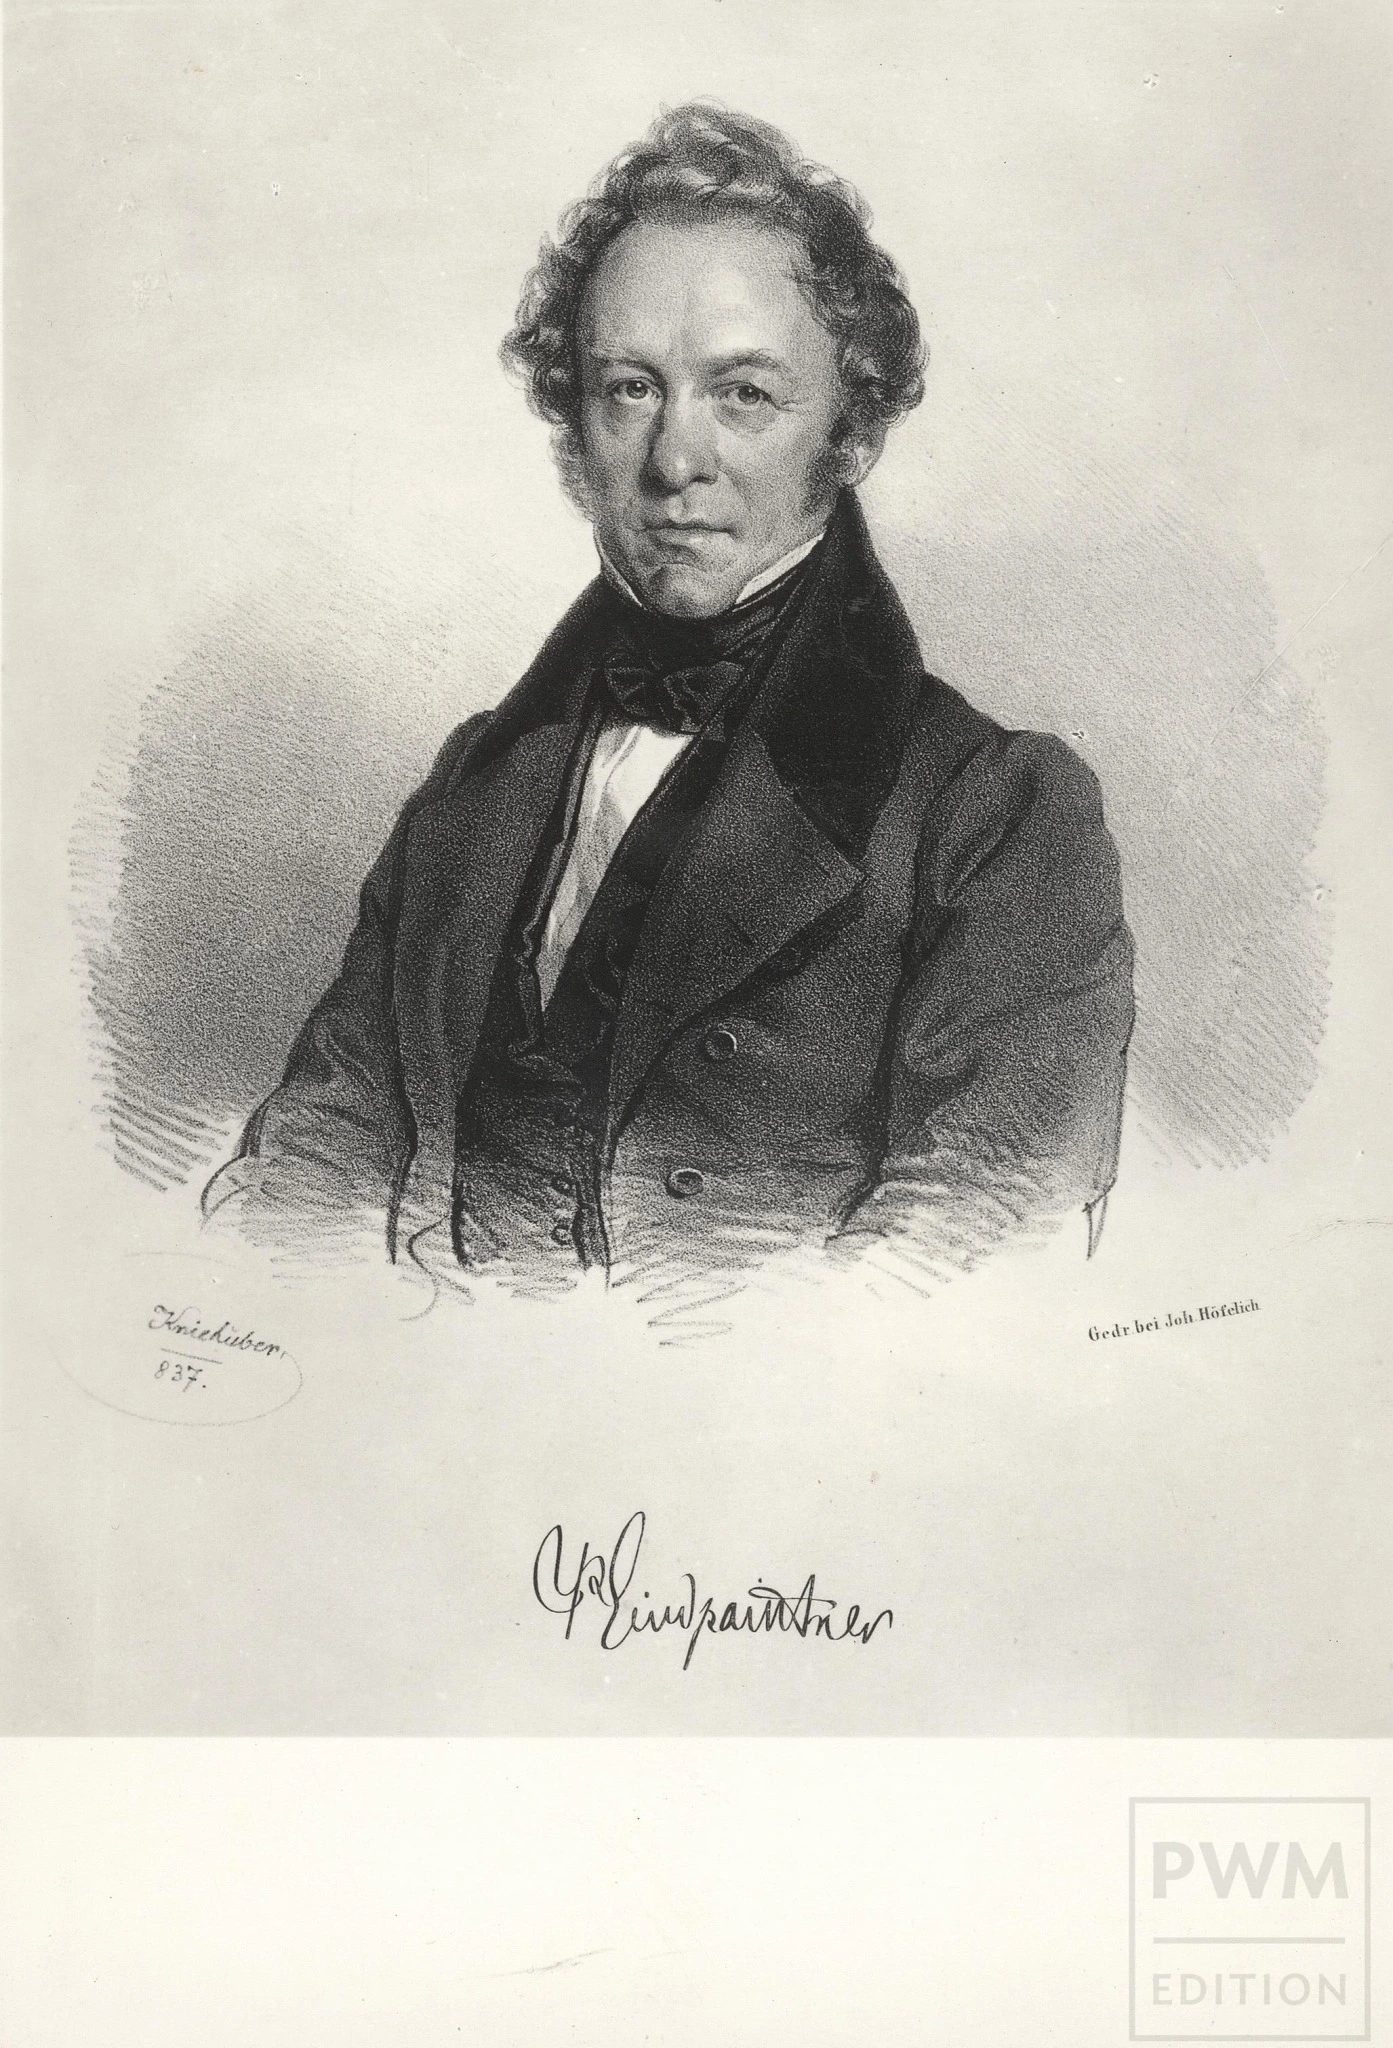 Lindpaintner, Peter Josef von